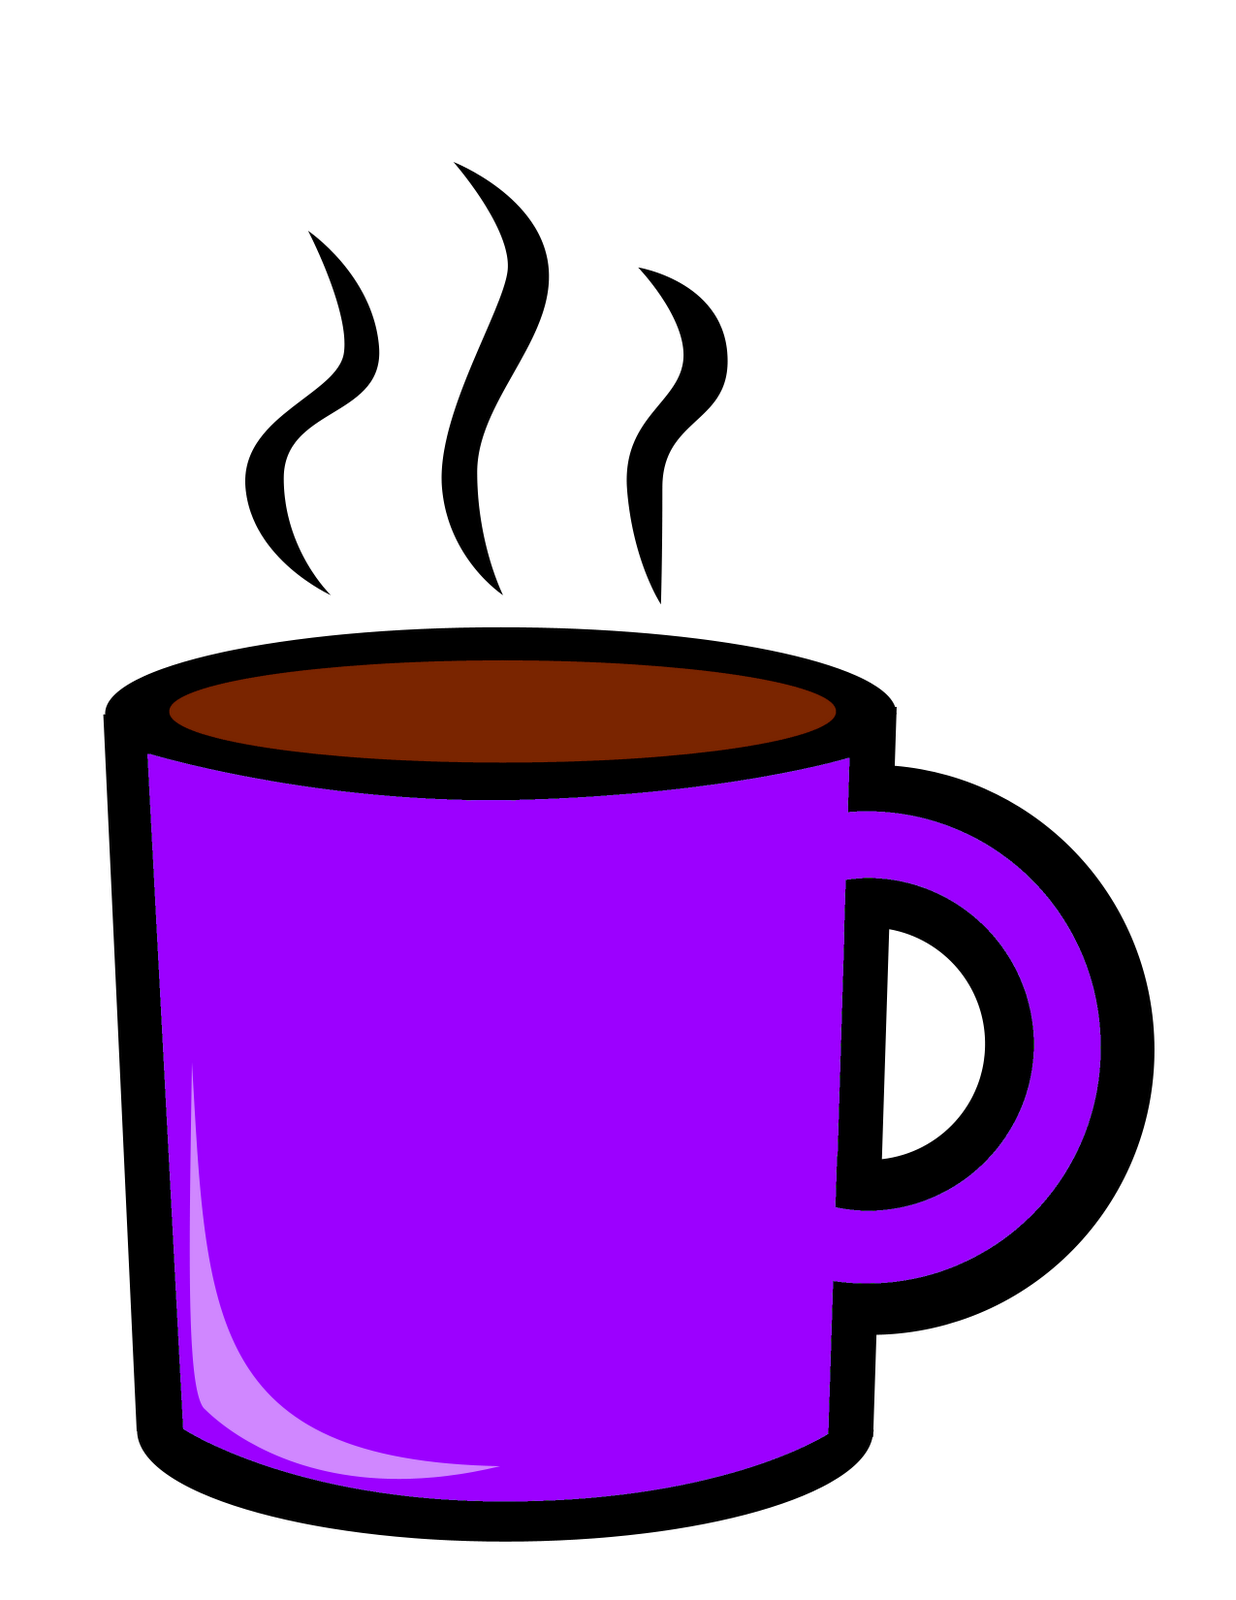 Hot chocolate ikolatal pinterest. Clipart cup polka dot tea